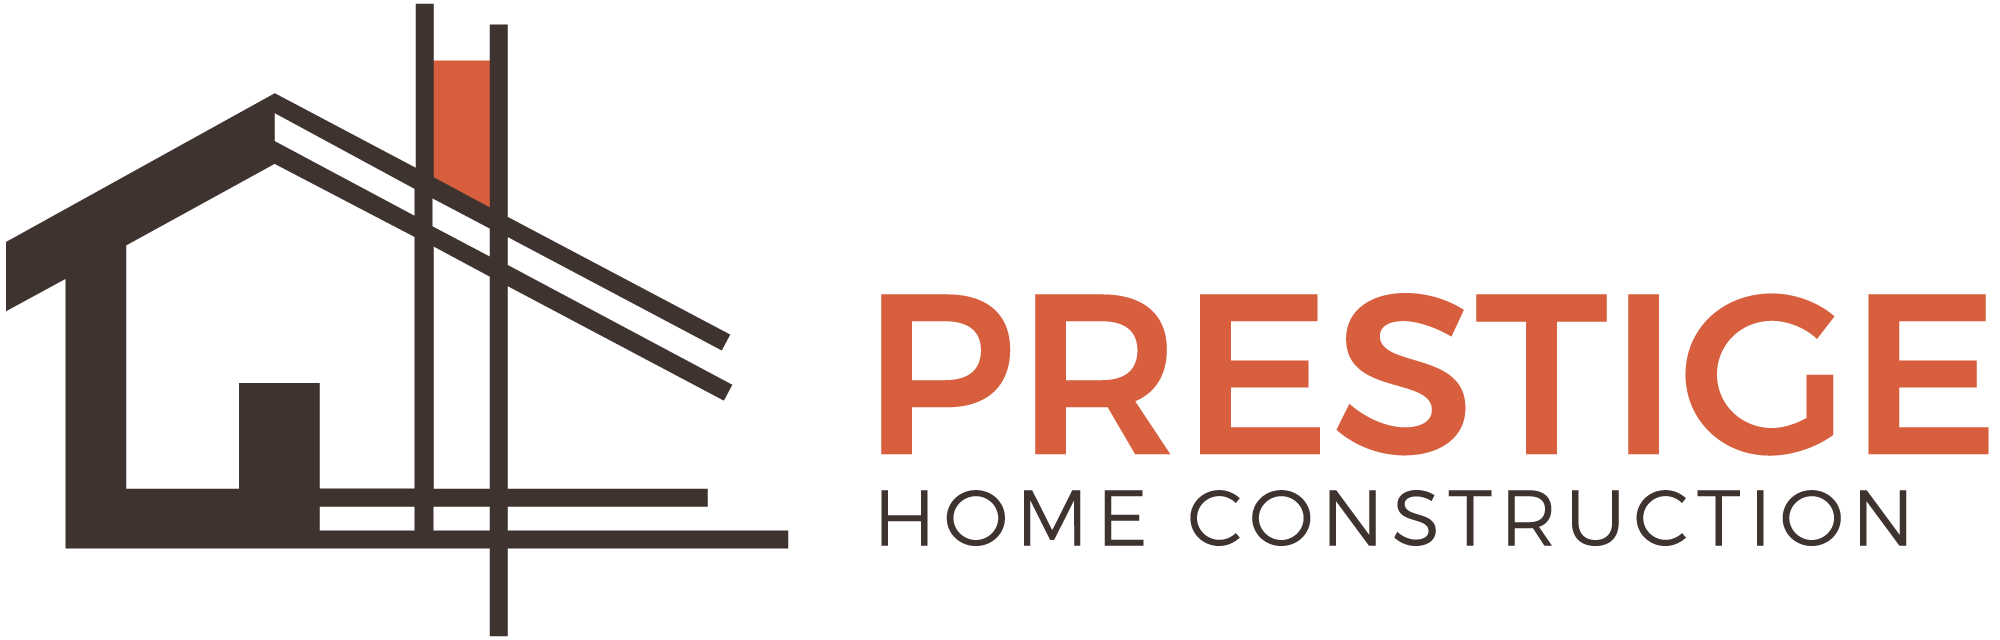 Prestige Home Construction, LLC Logo